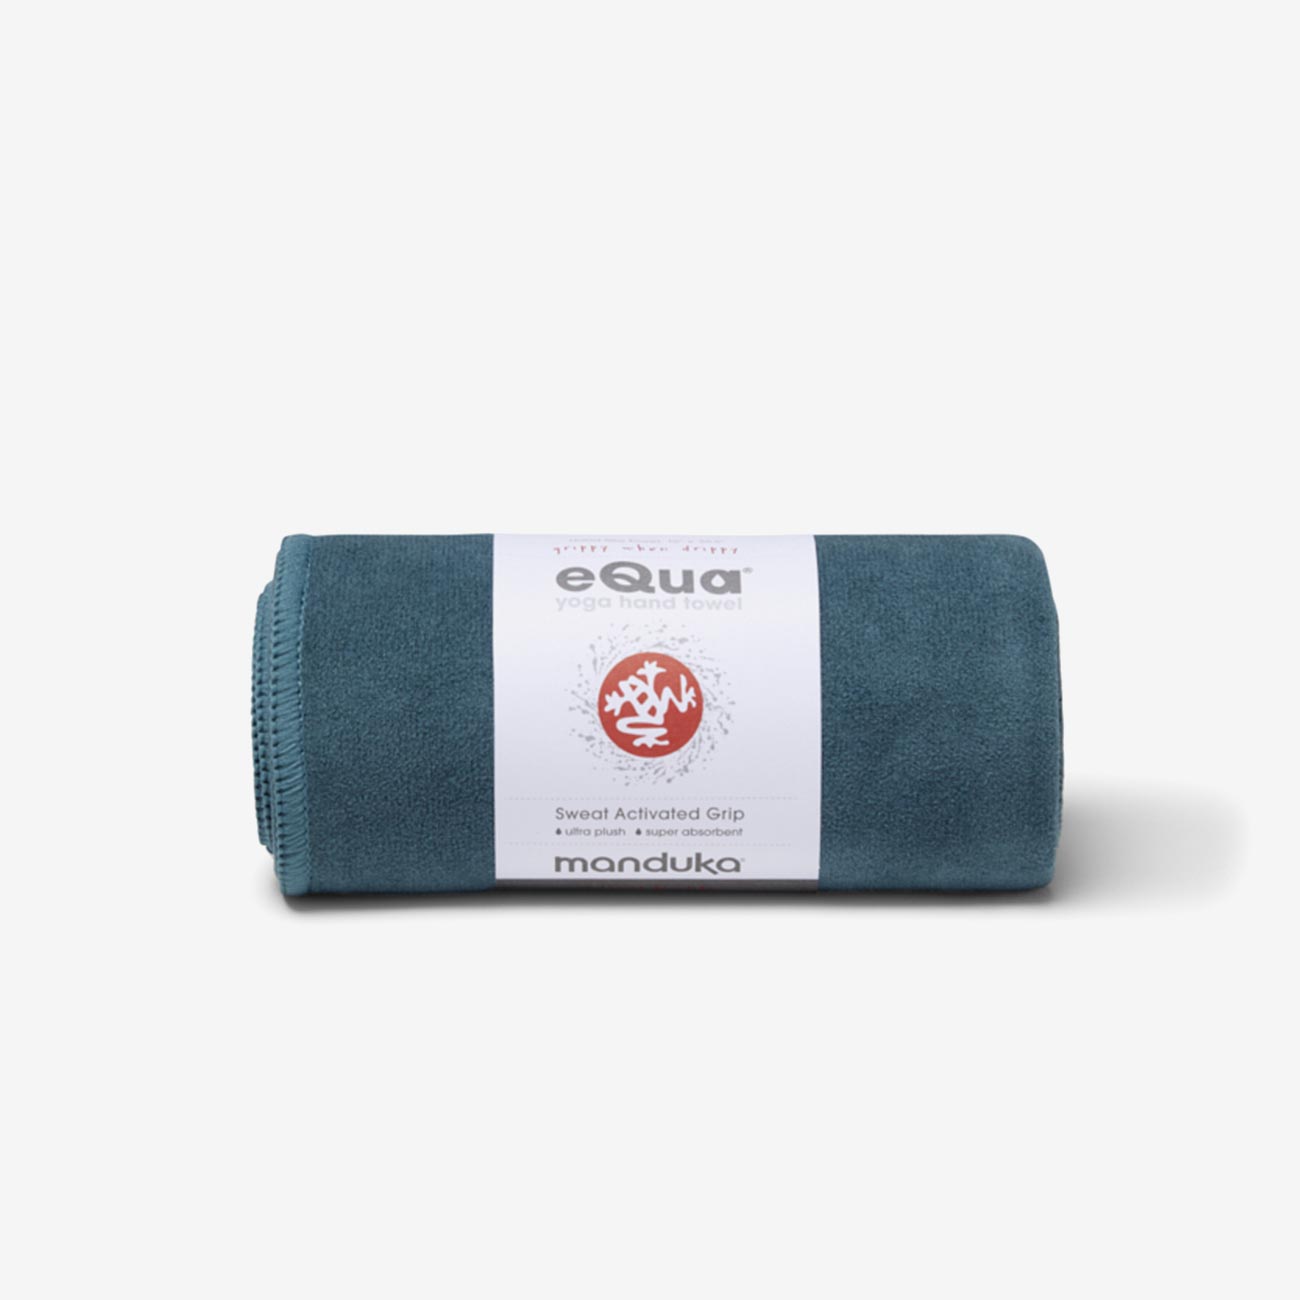 Manduka Eko SuperLite Yoga Mat & eQua Yoga Hand Towel & Commuter